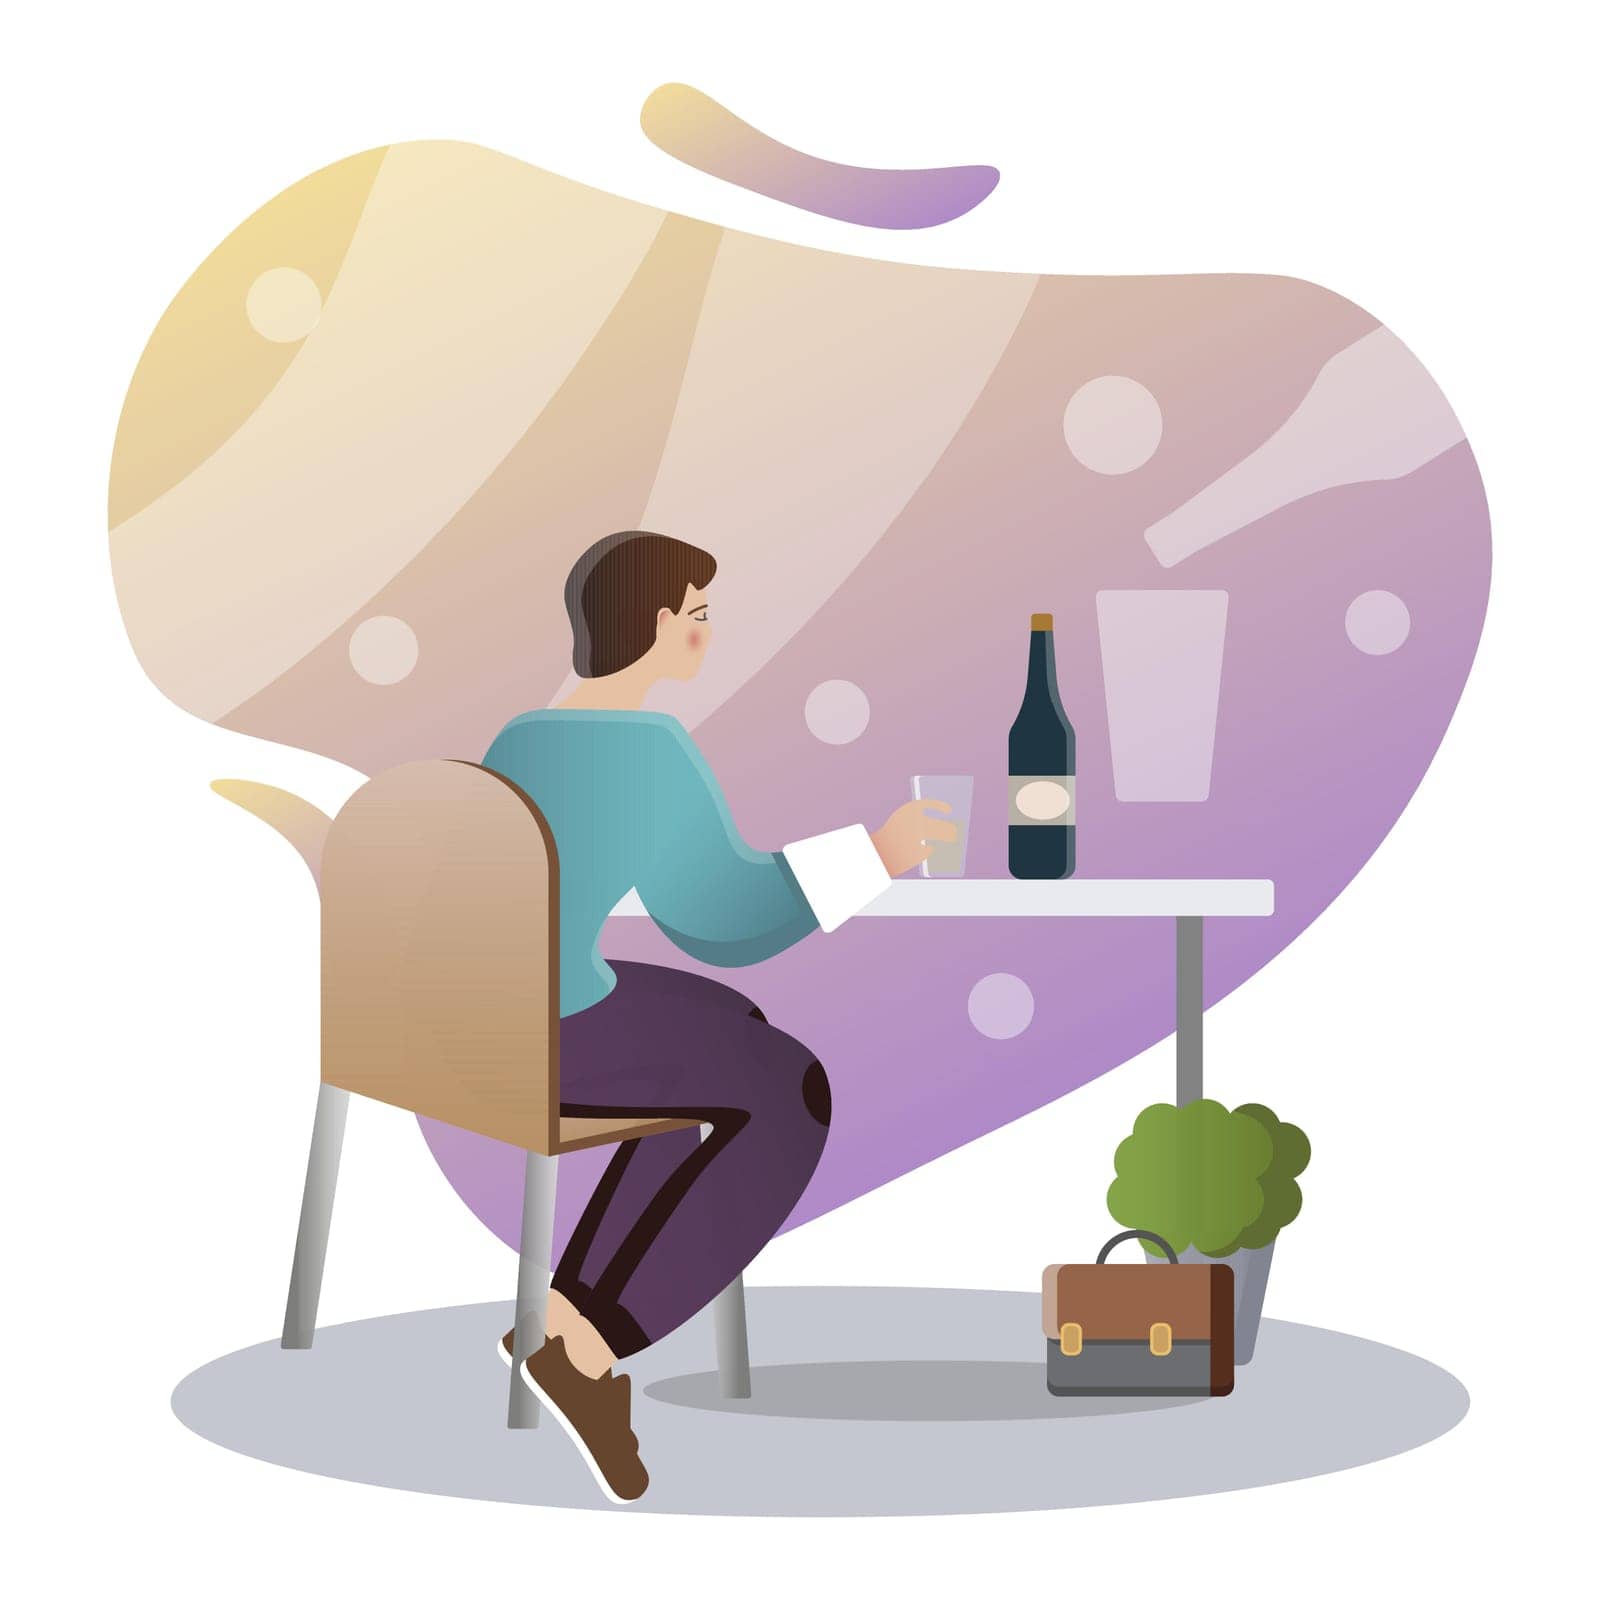 Alcoholism illustration. Man, bottle, glass, table. Creative editable vector graphic design.